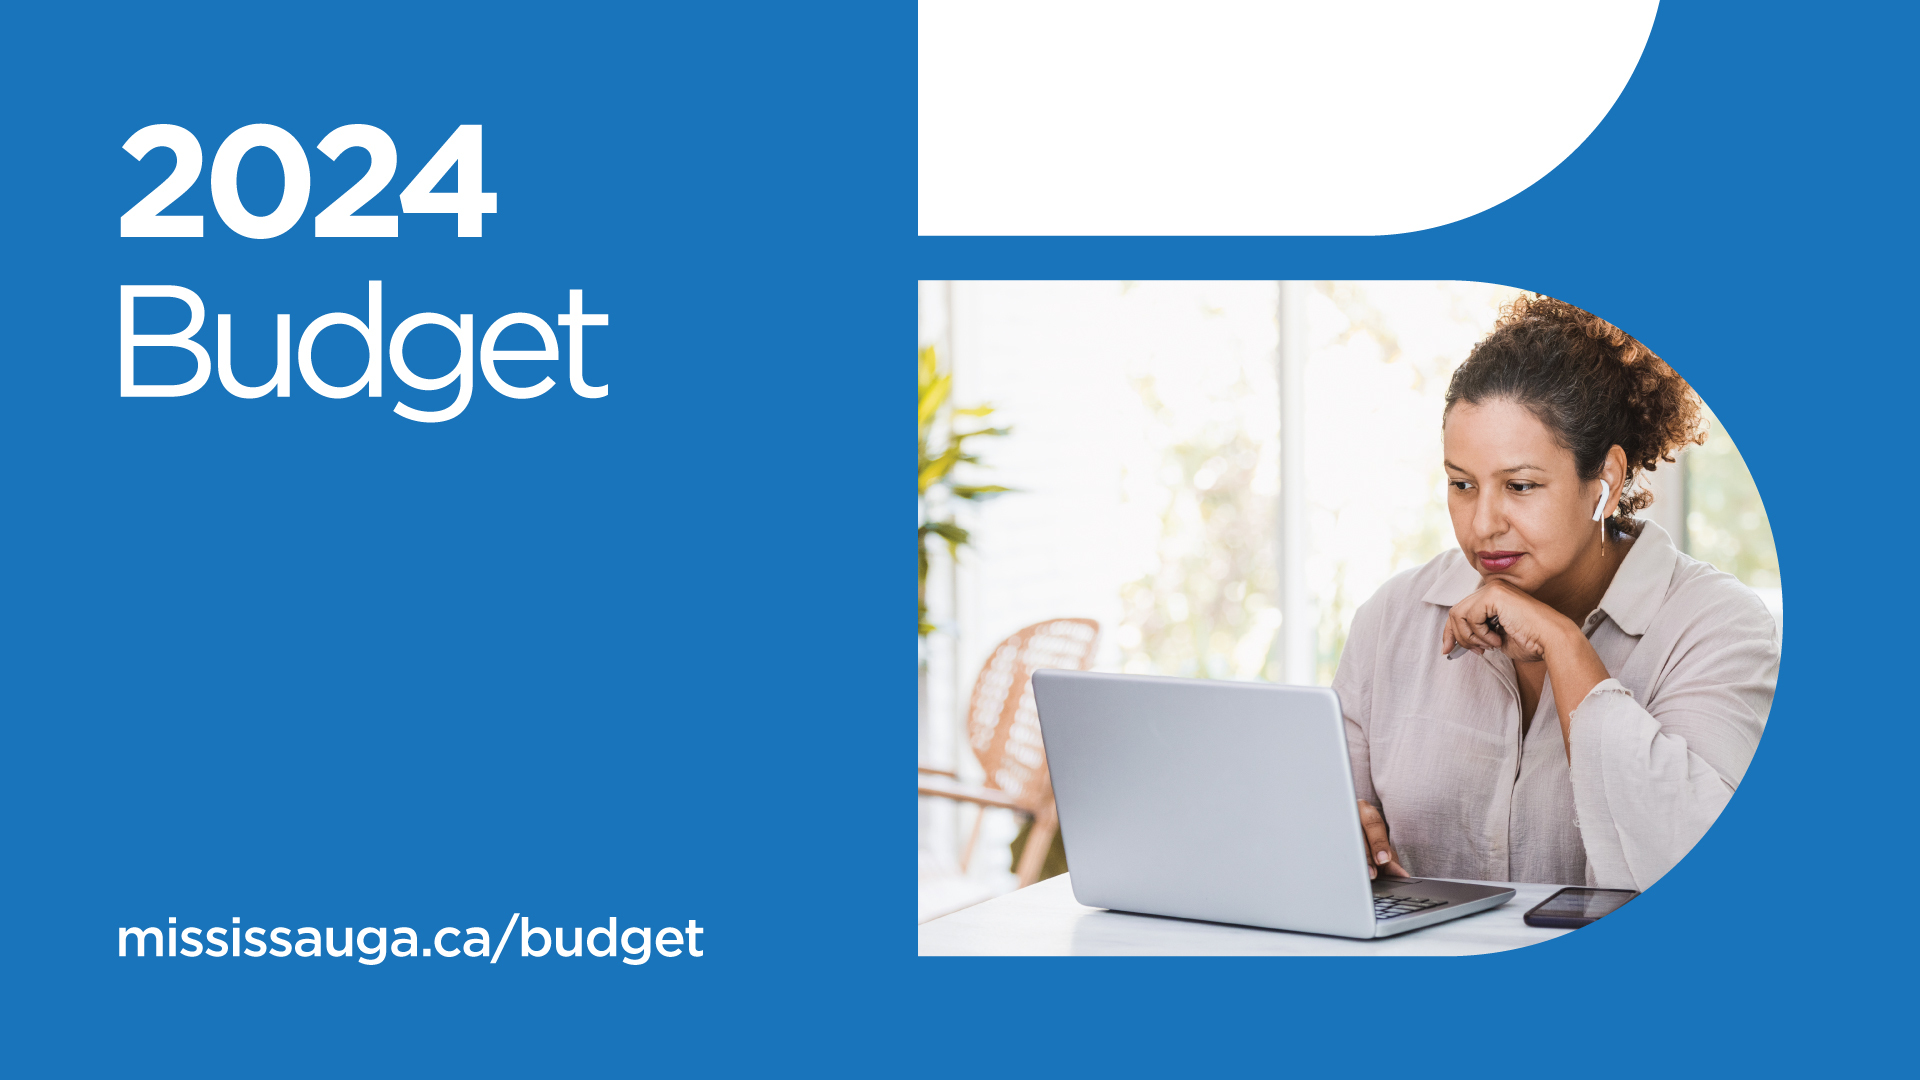 2024 Budget - mississauga.ca/budget